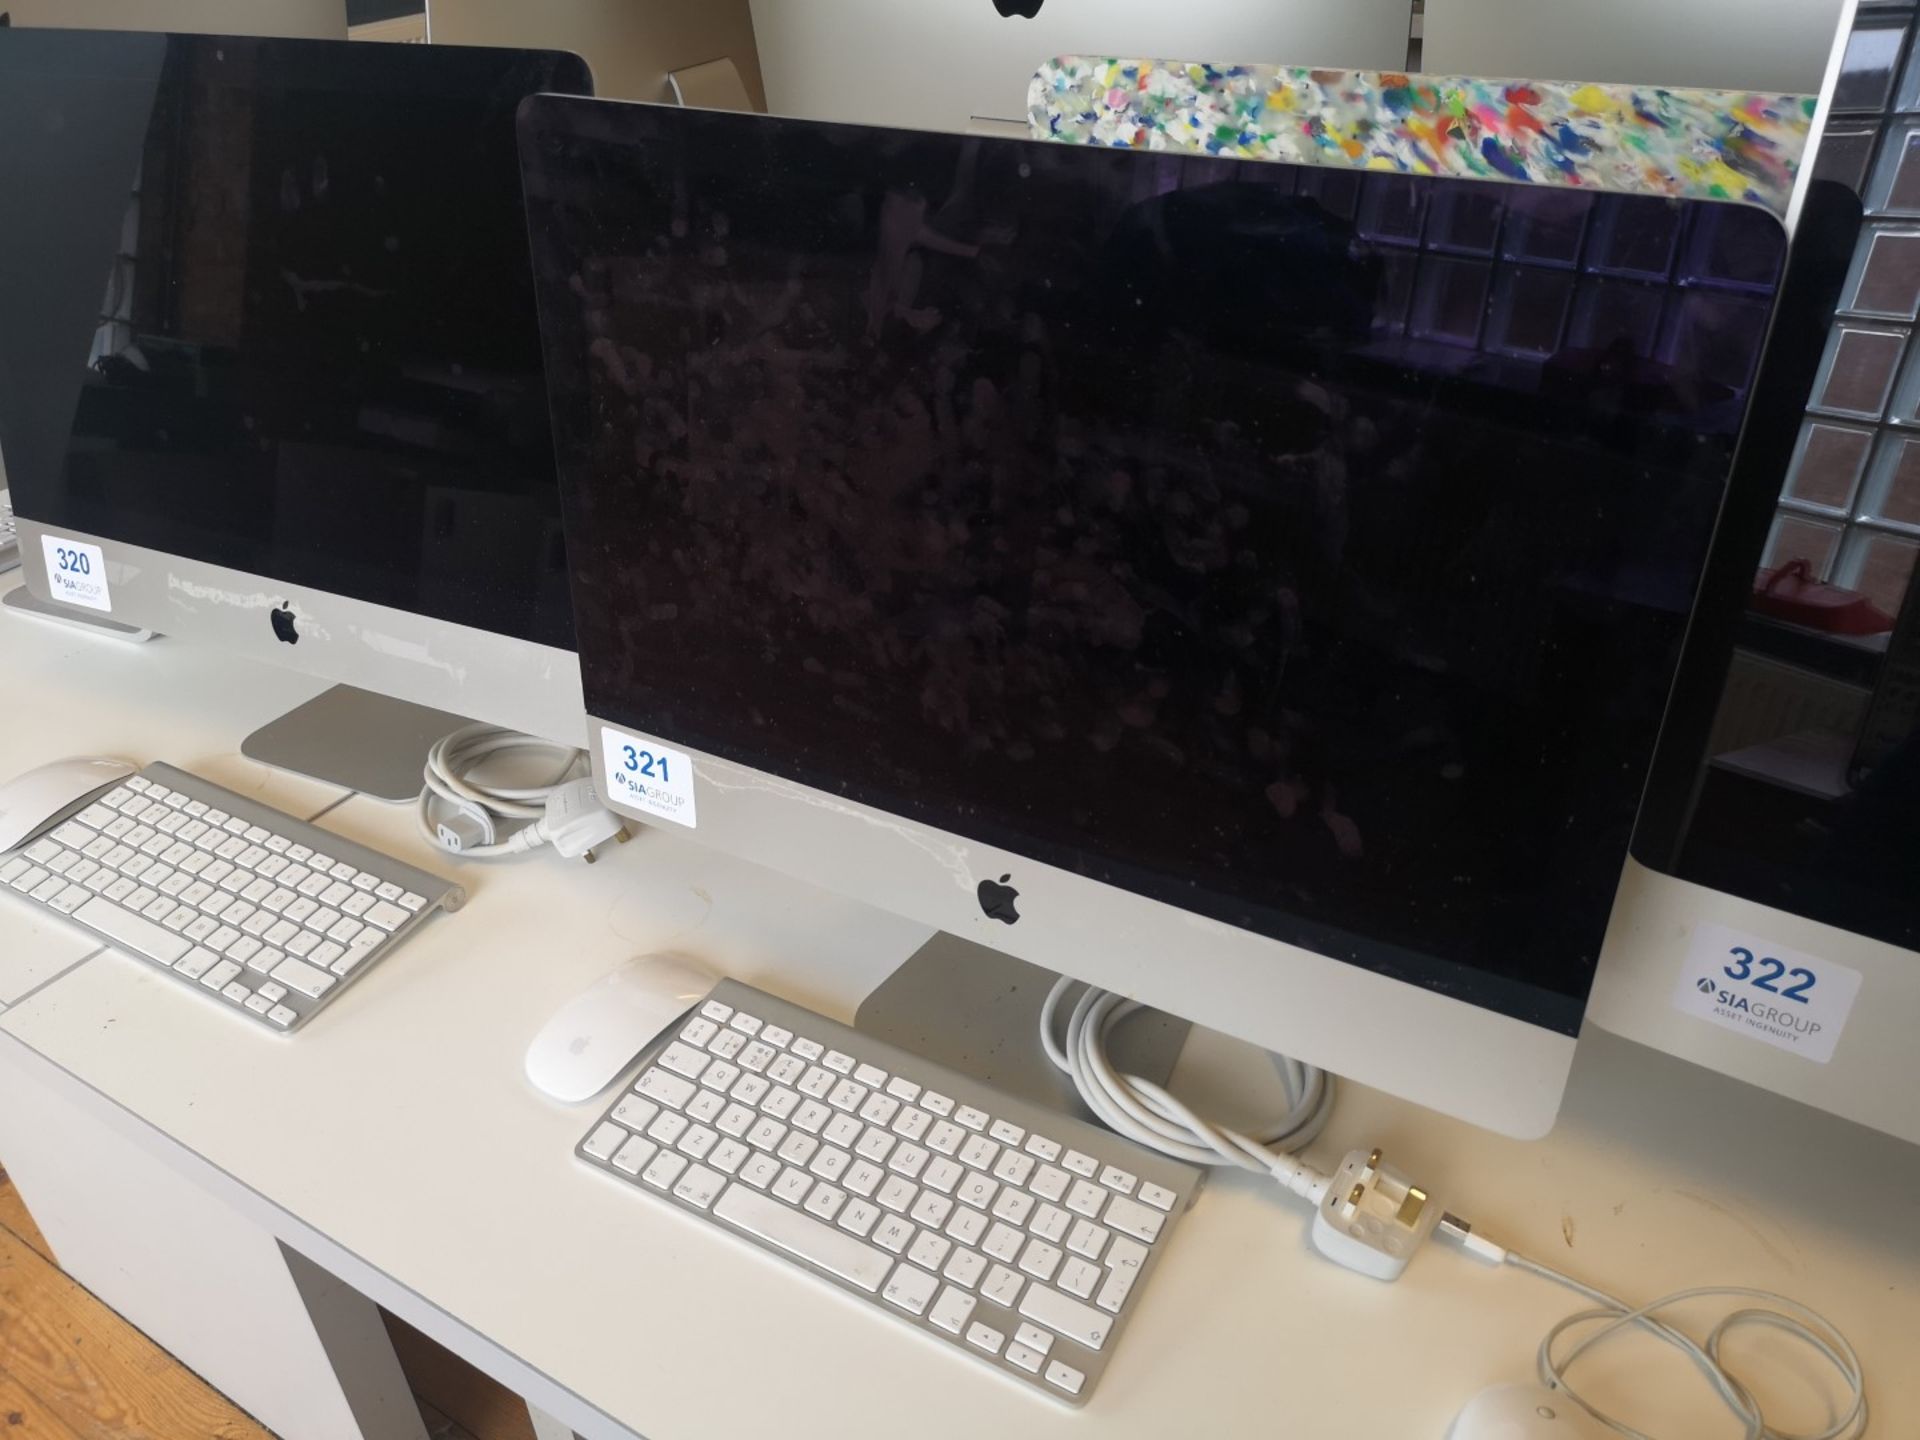 Apple iMac "Core i5" 2.7 21.5-Inch (Late 2012) - Image 2 of 2